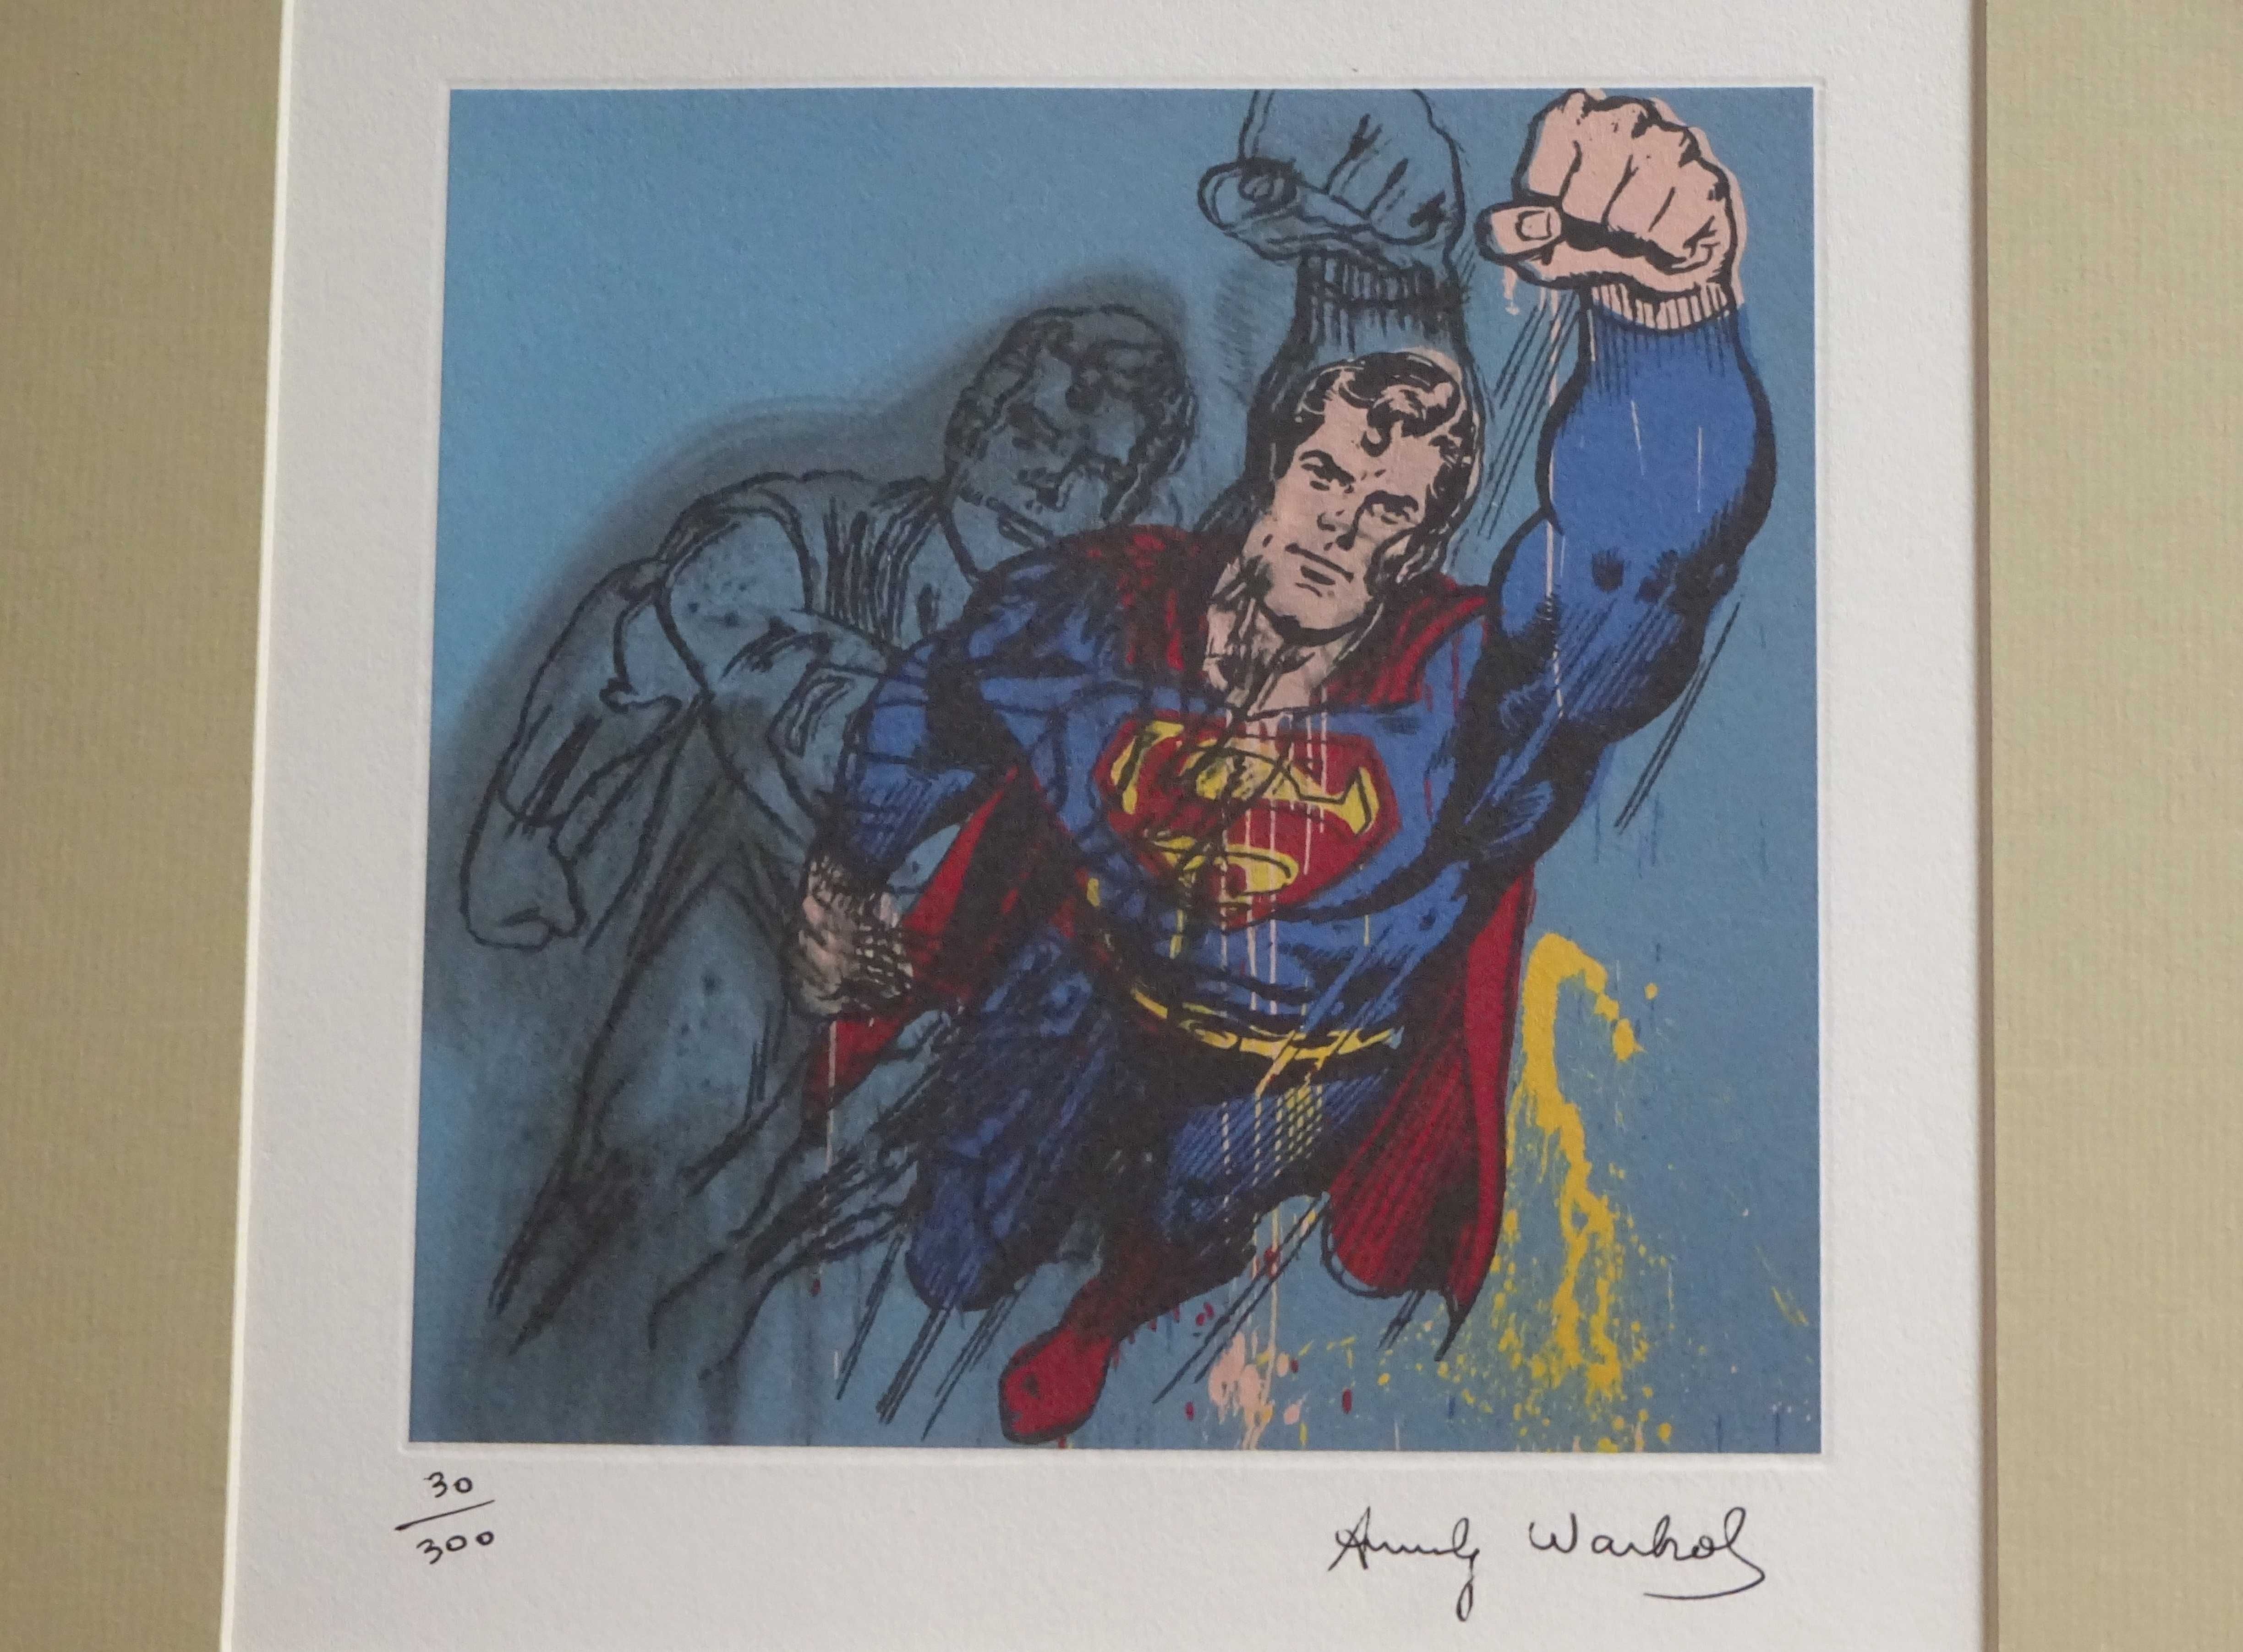 Tablou Andy Warhol, ‘Superman’| Cromolitografie RARA